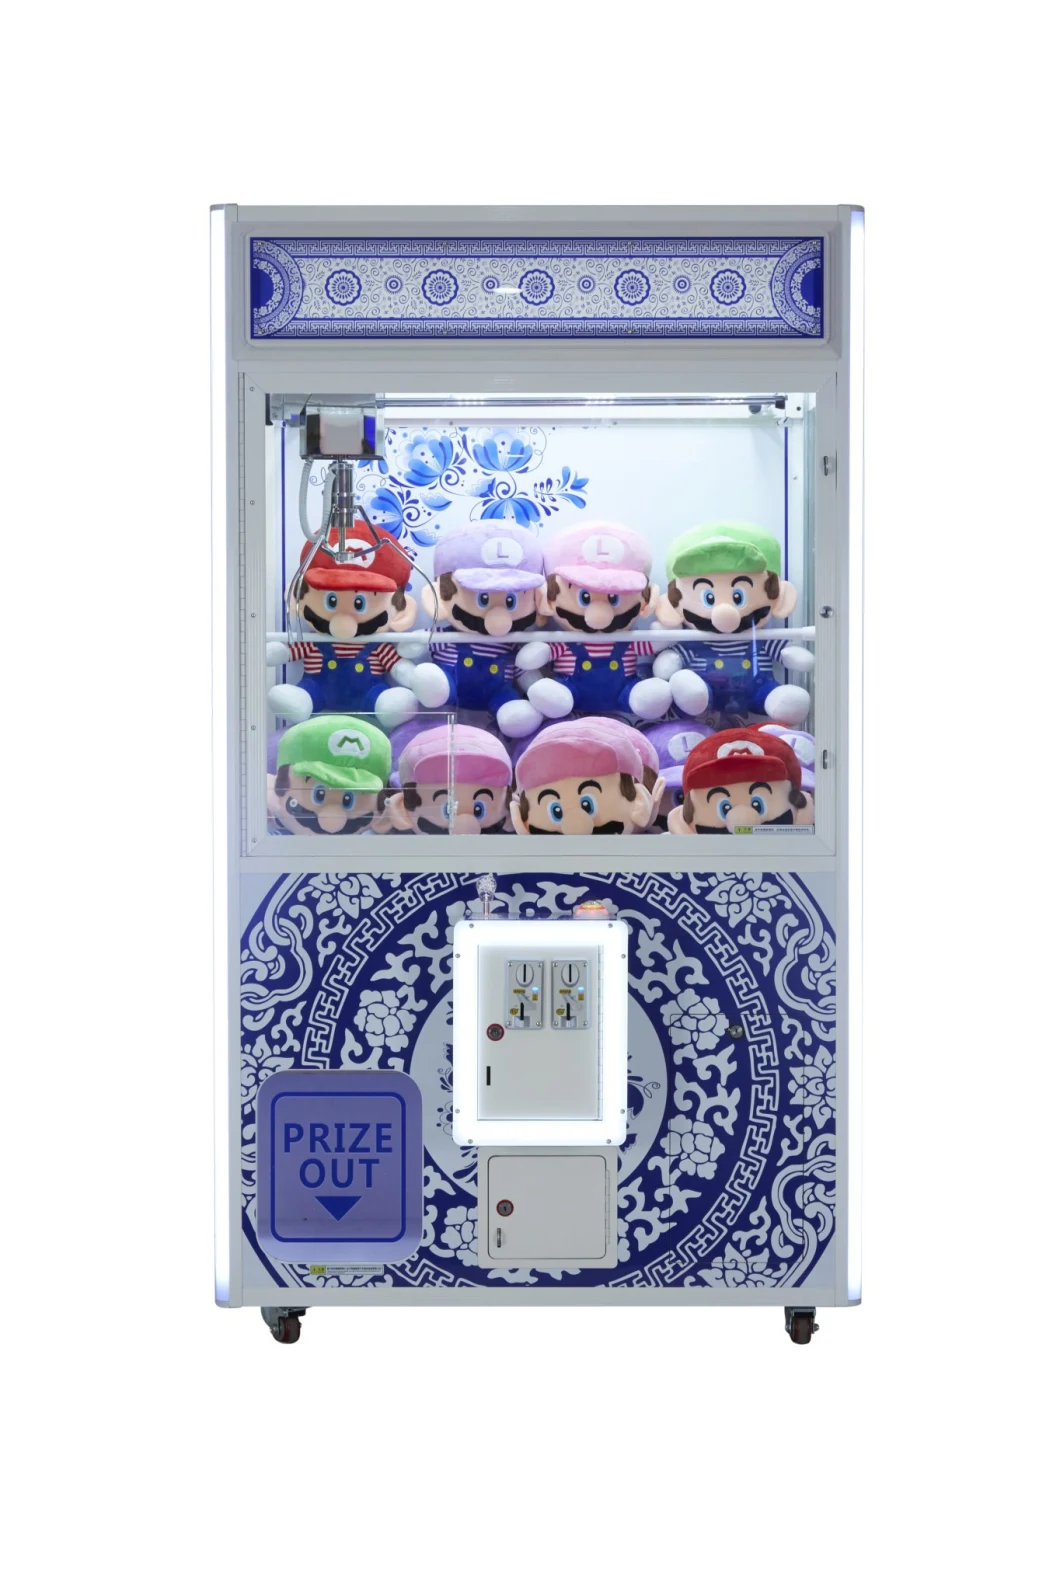 Gift/Toy Vending/Price/Vending/Amusement/Arcade/Game /Claw Machine/Game Player/Arcade Game Machines/Video Game/Amusement Machine/Arcade Machine/Game Machine